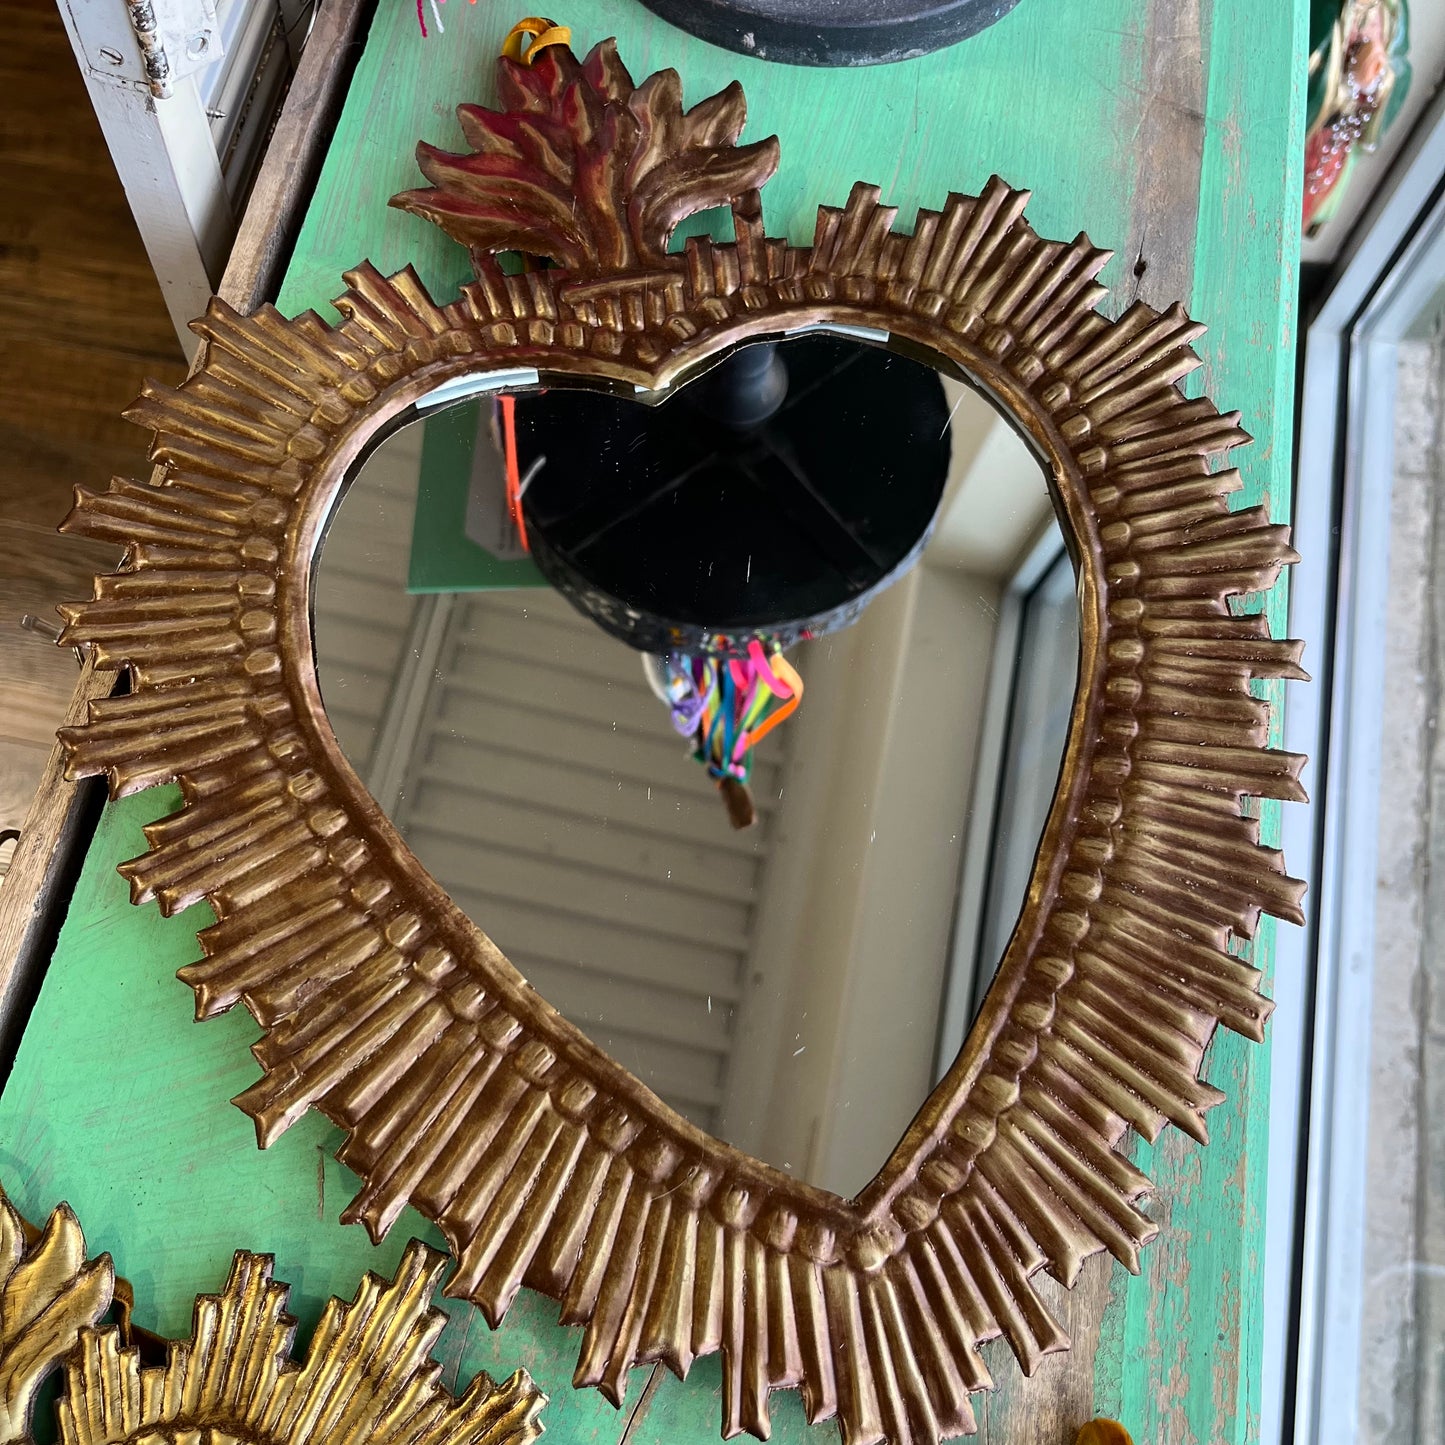 Tin Rays Sacred Heart Mirror